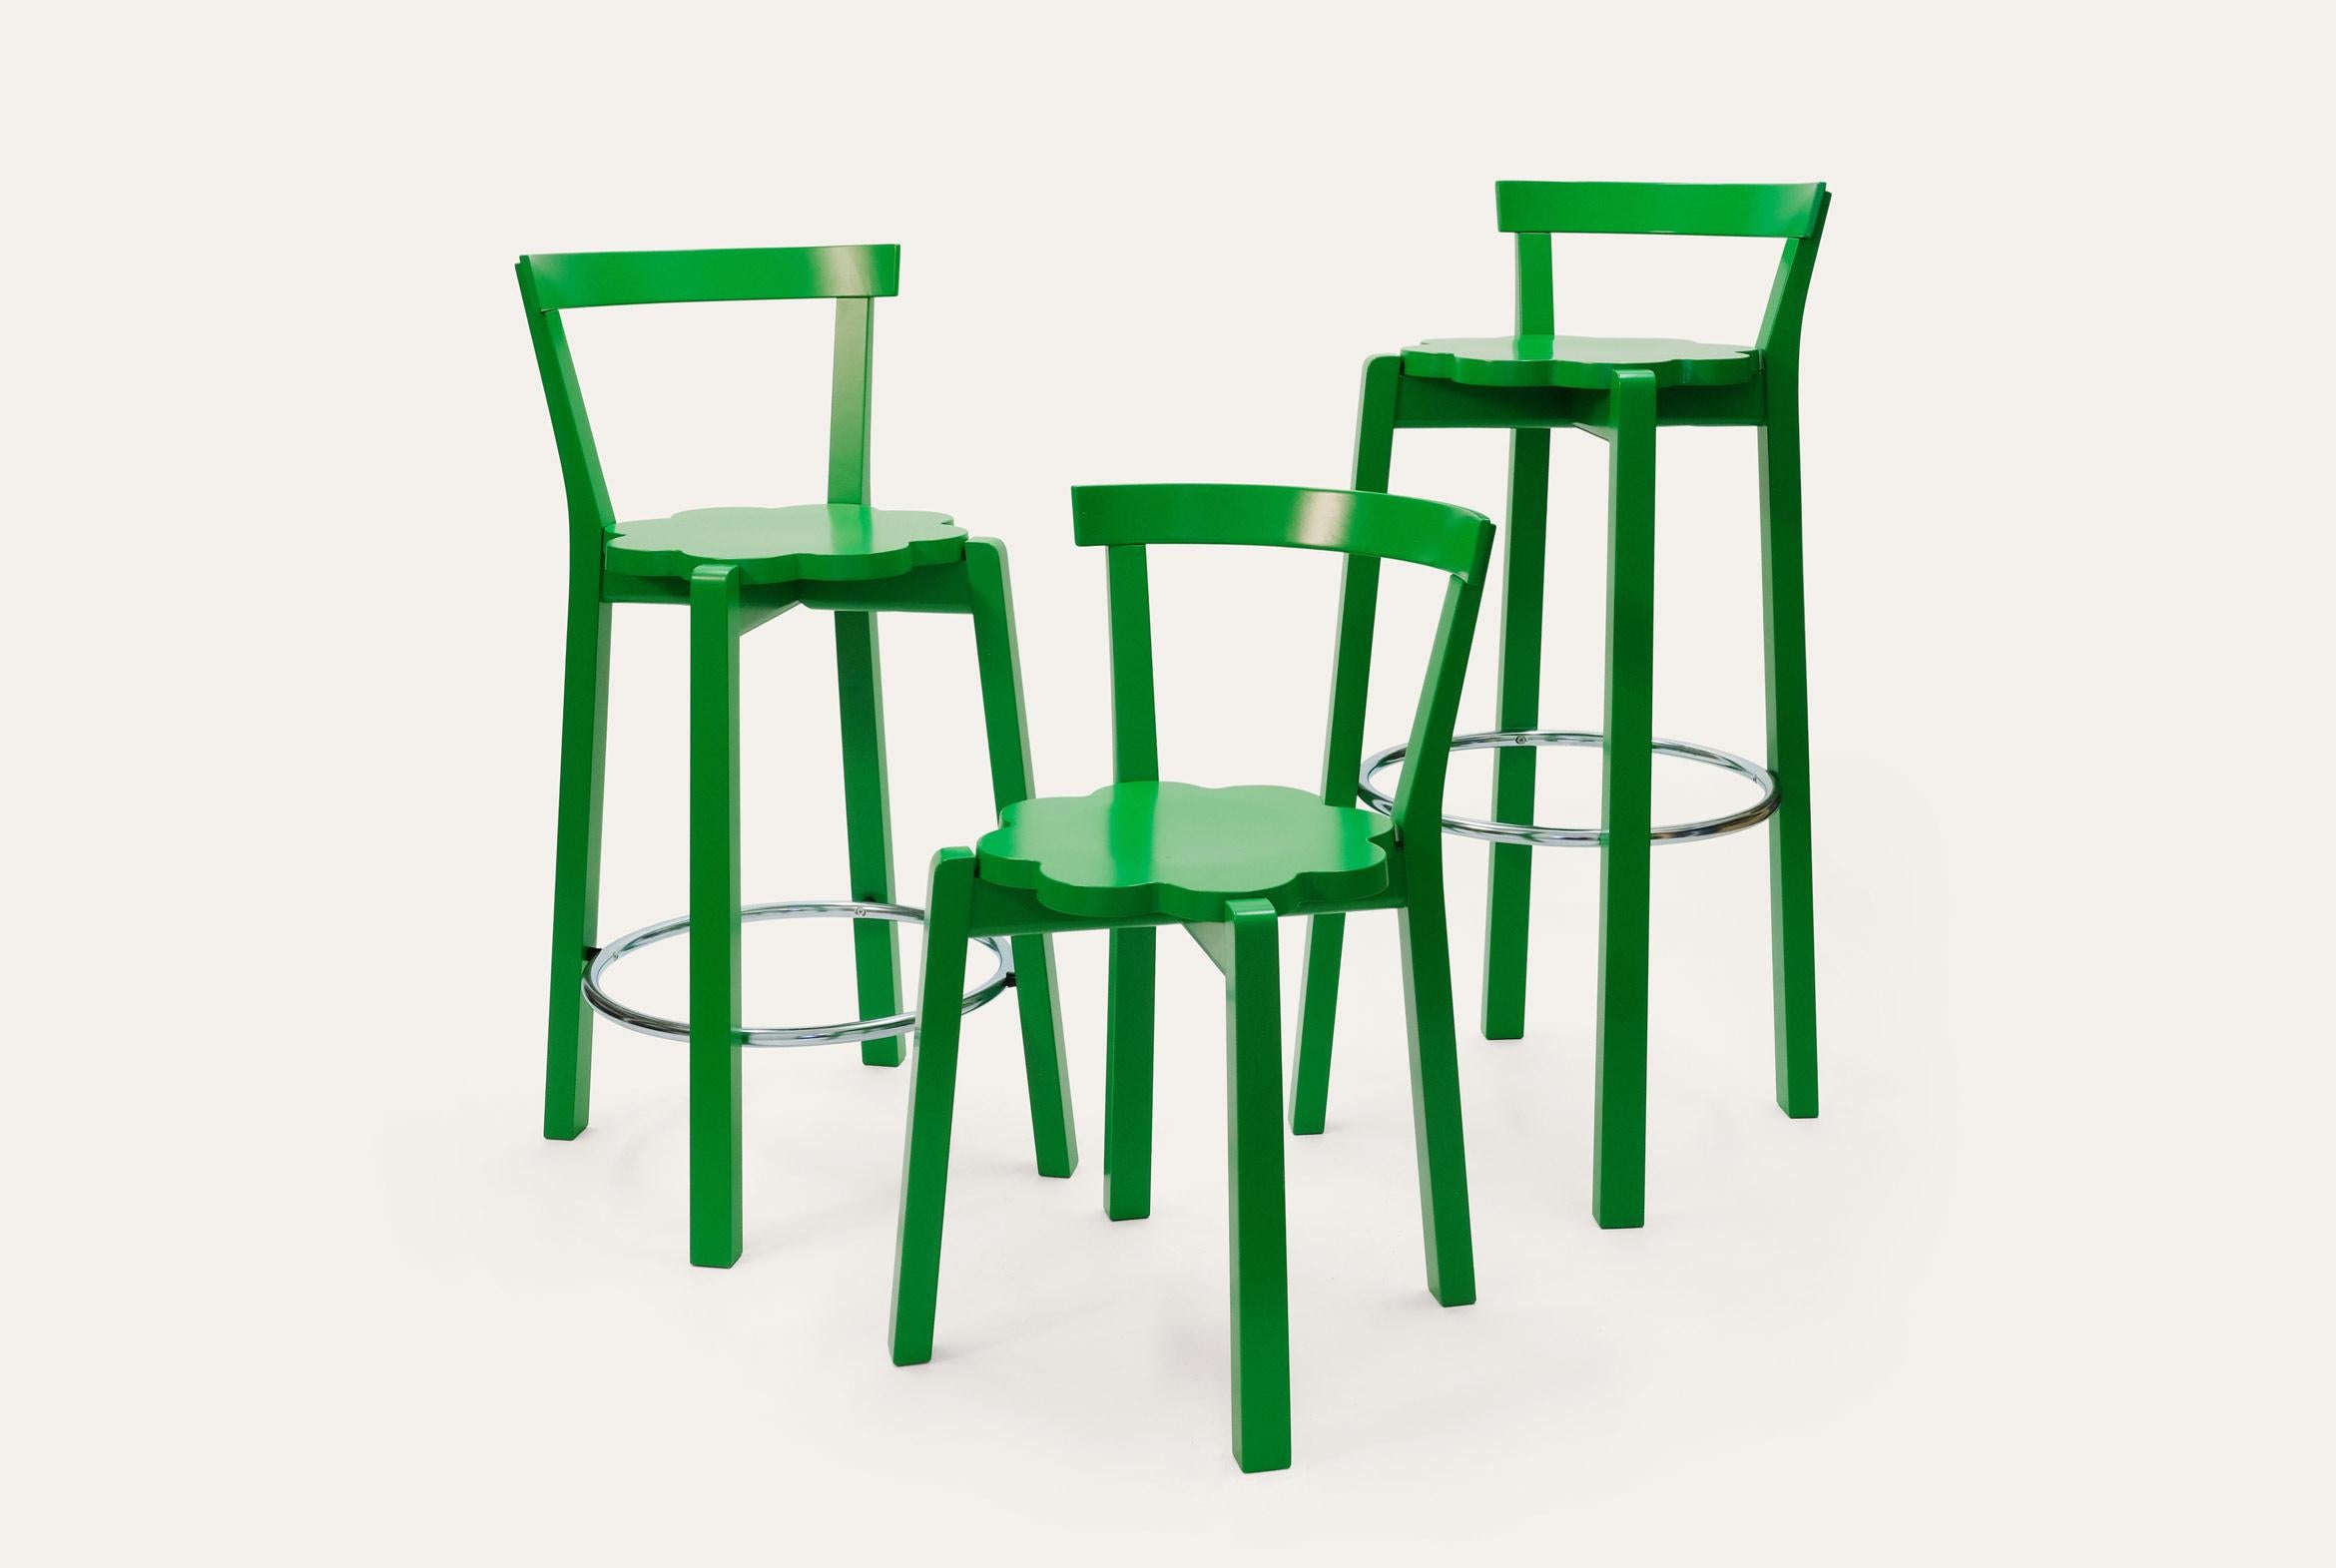 Other Green Blossom Chair by Storängen Design